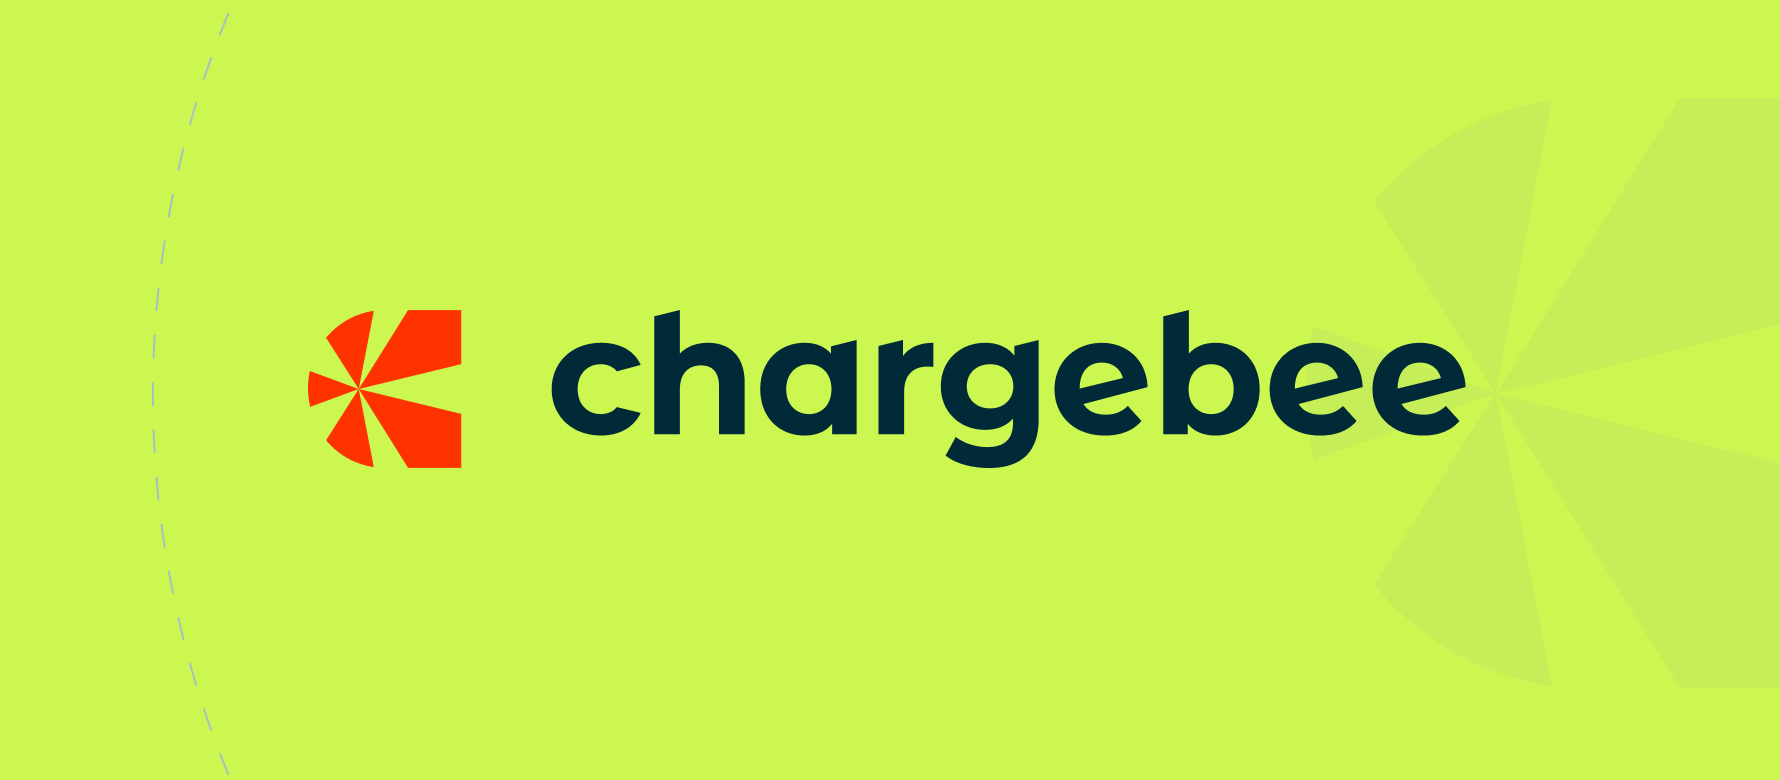 Chargebee | Banner